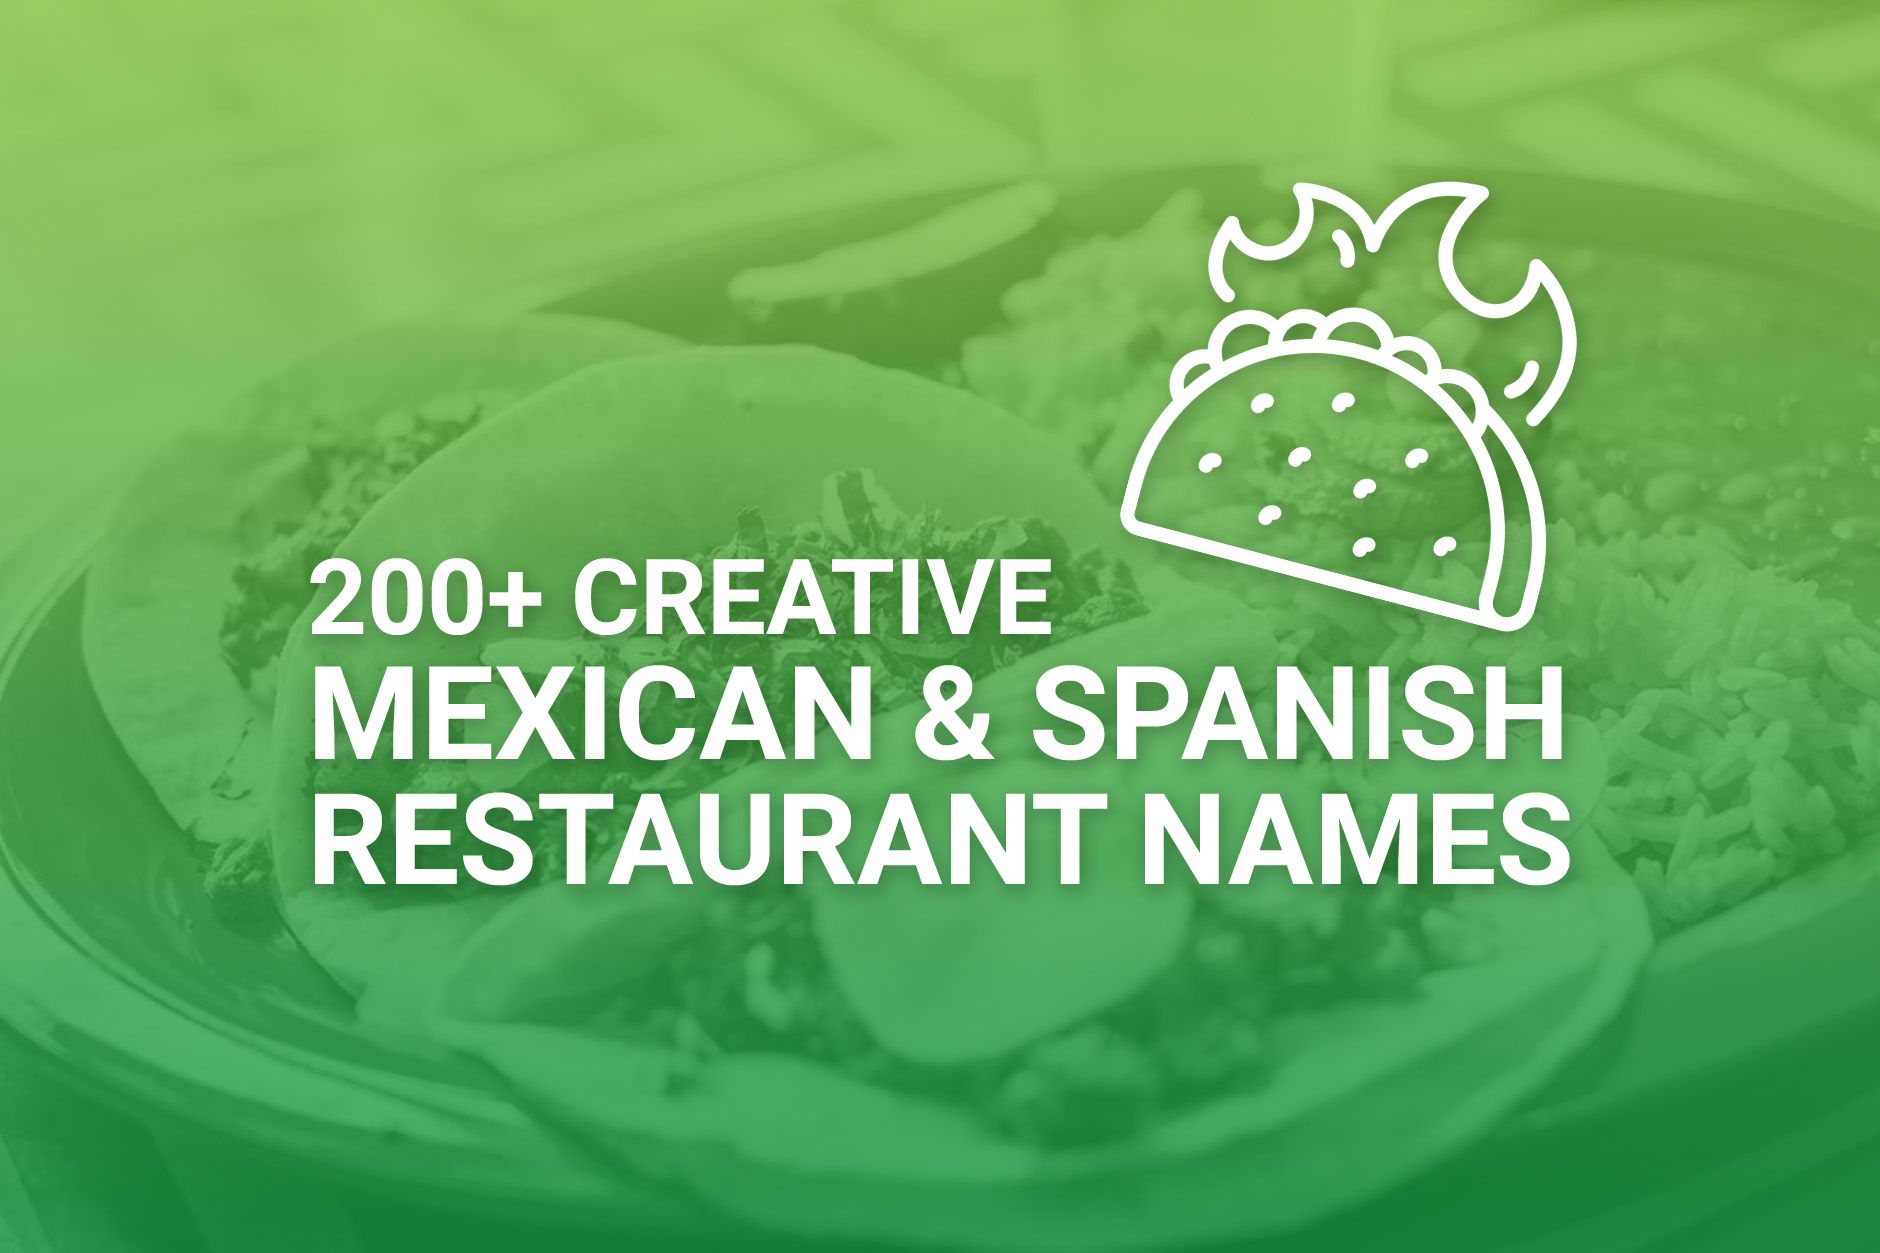 200+ Creative Mexican & Spanish Restaurant Names